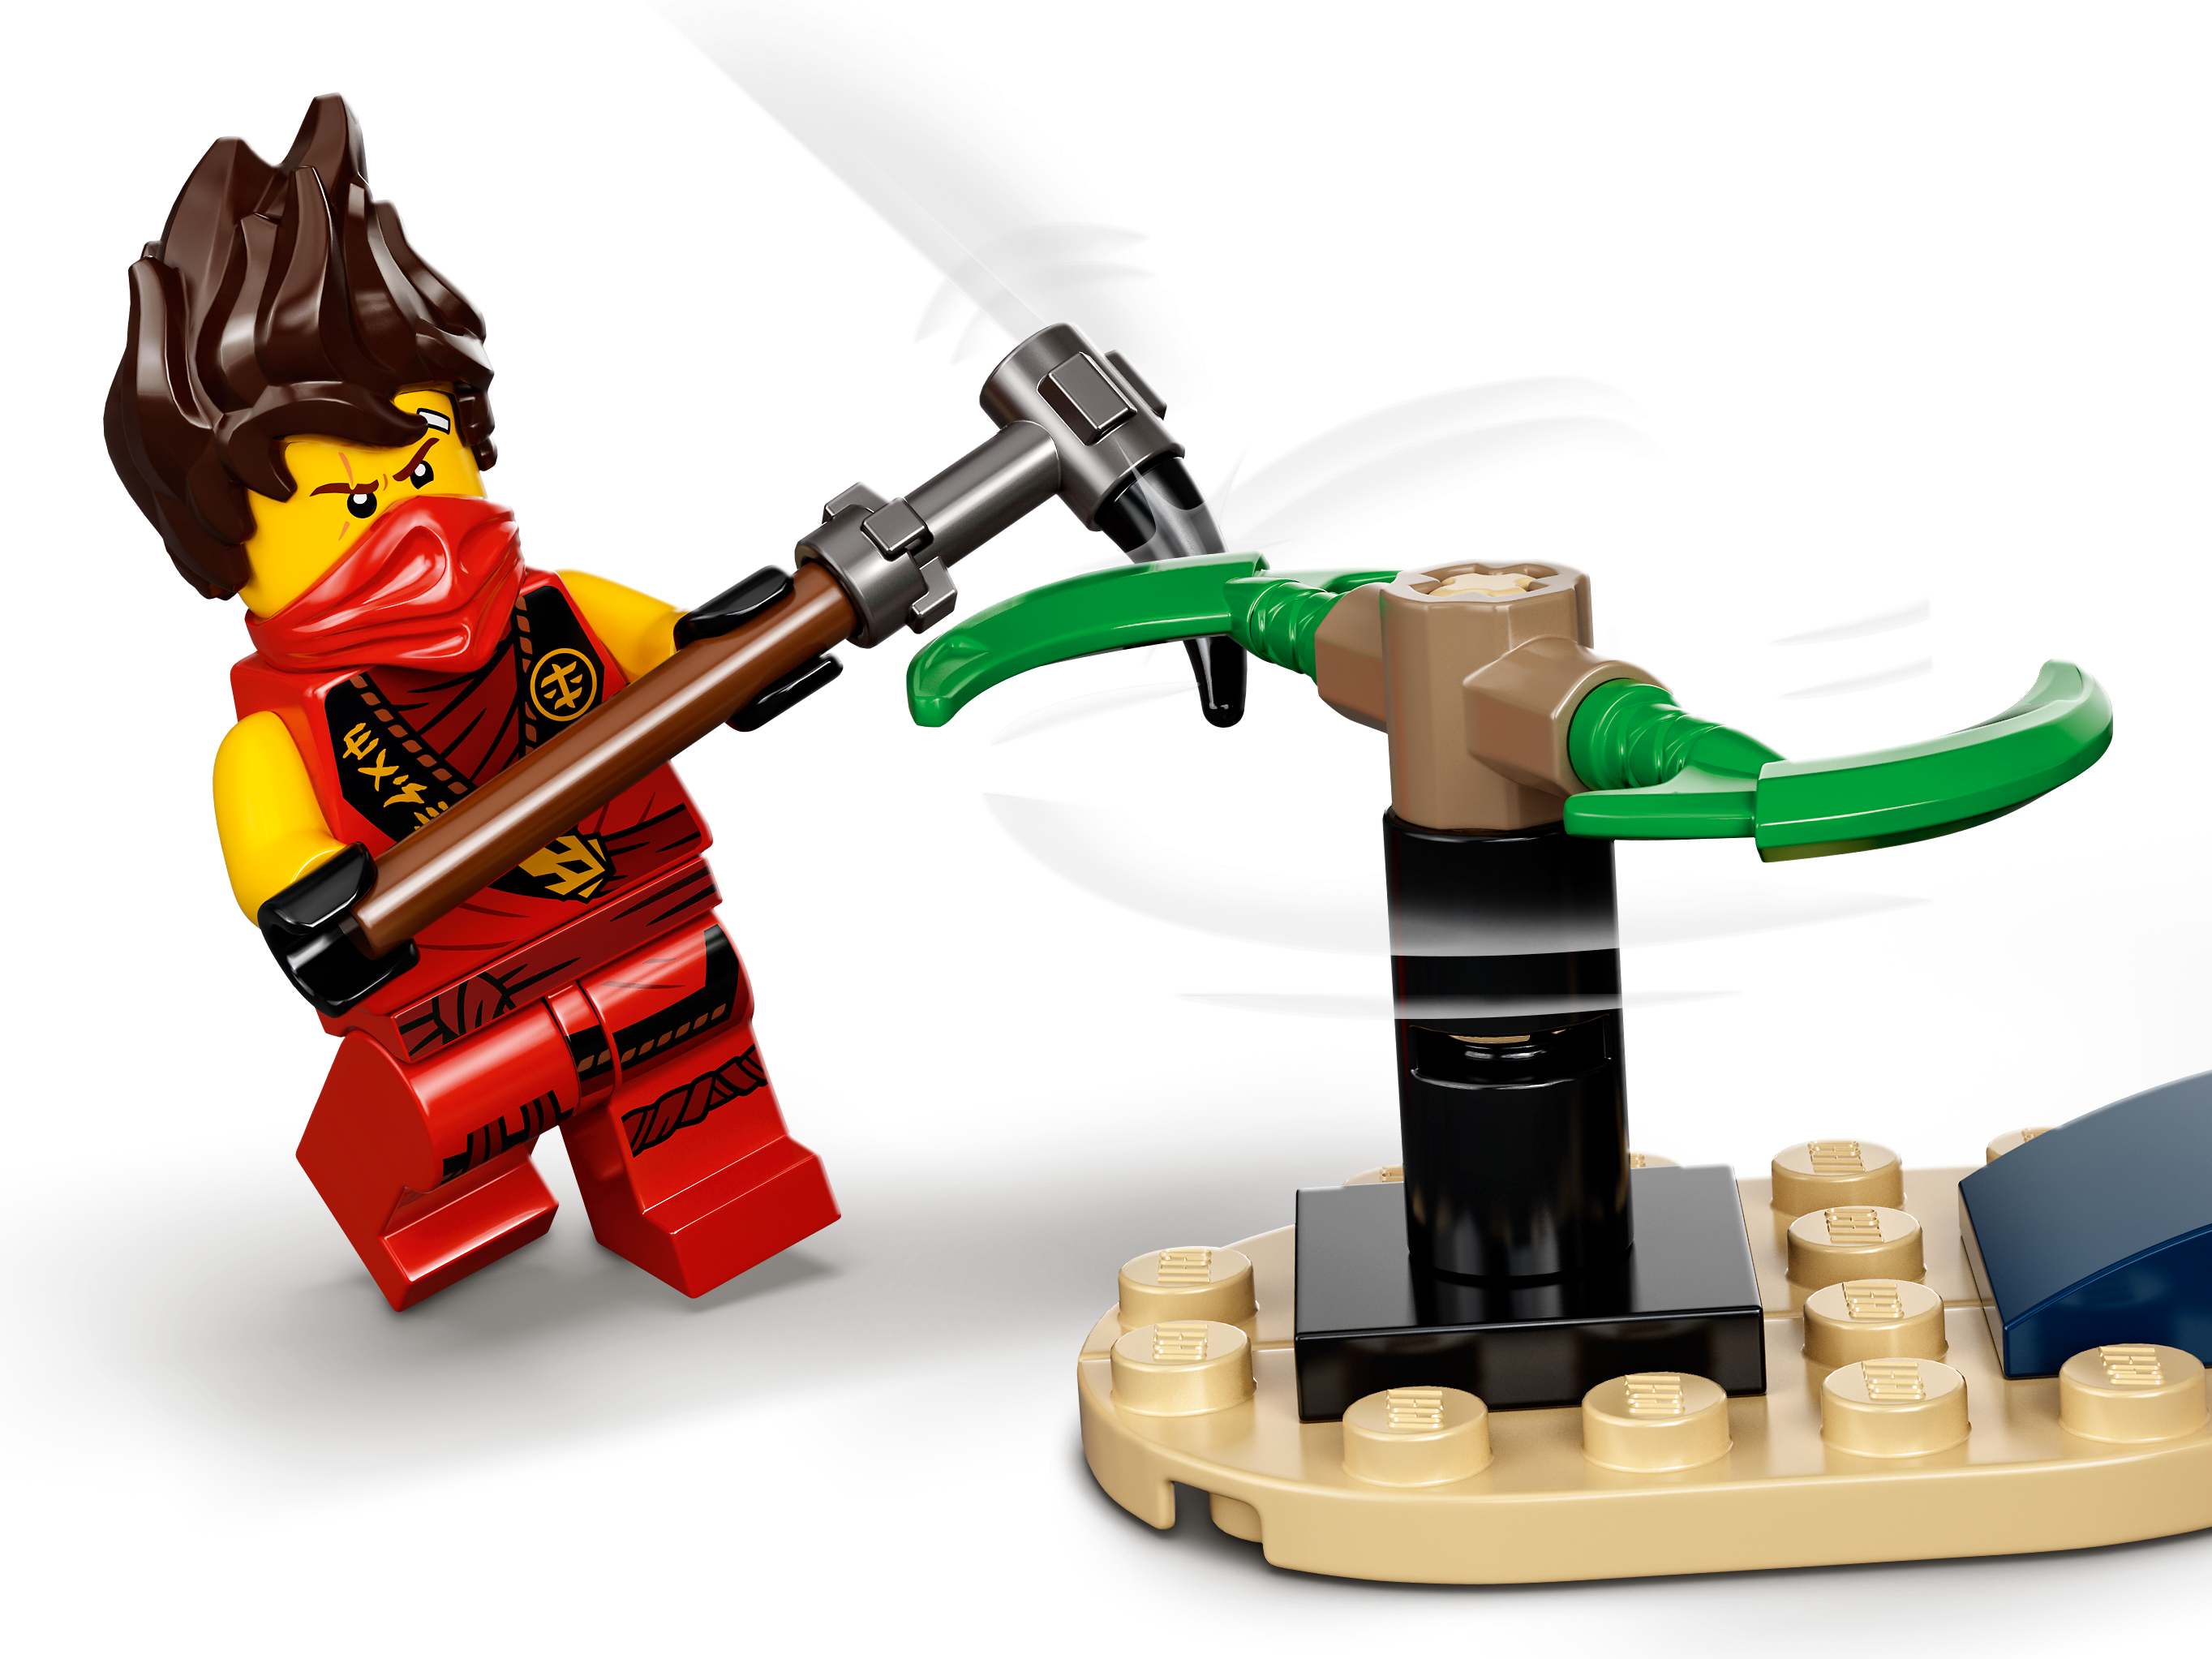 AU Seller Tournament of Elements Details about   LEGO Ninjago 71735 BNISB